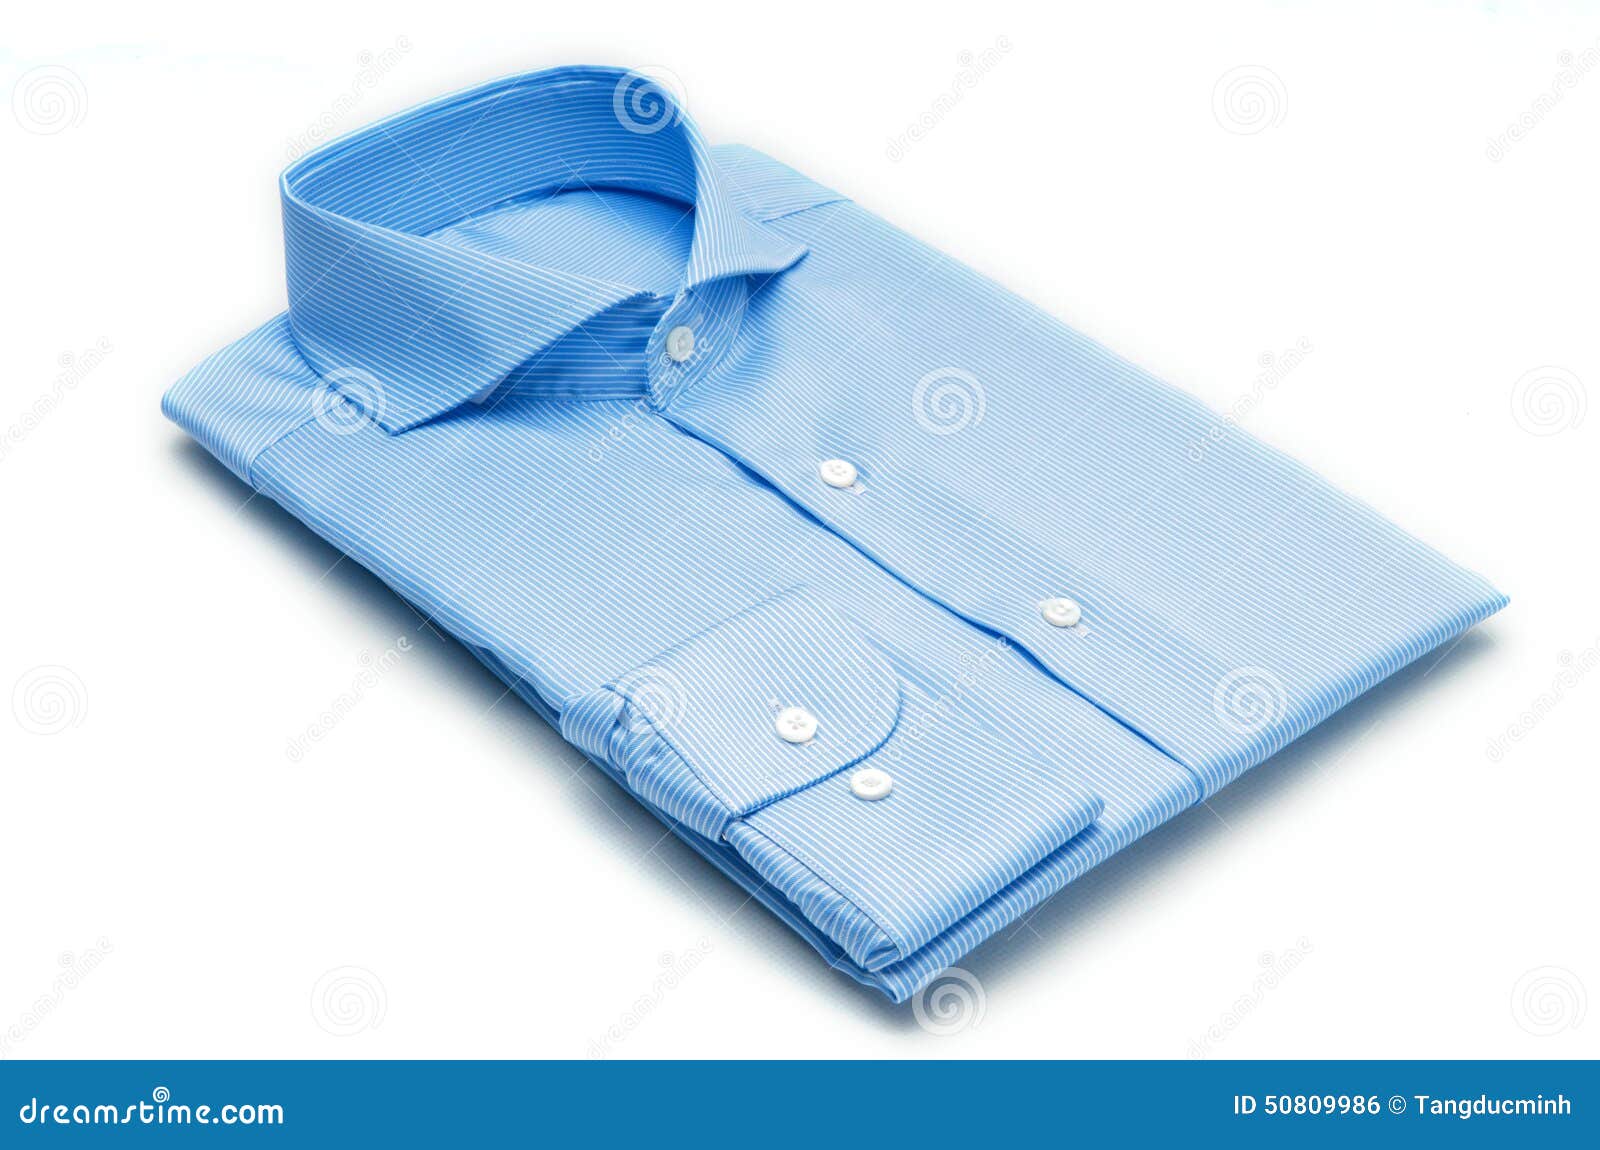 Dress shirt stock photo. Image of garment, folded, clothes - 50809986